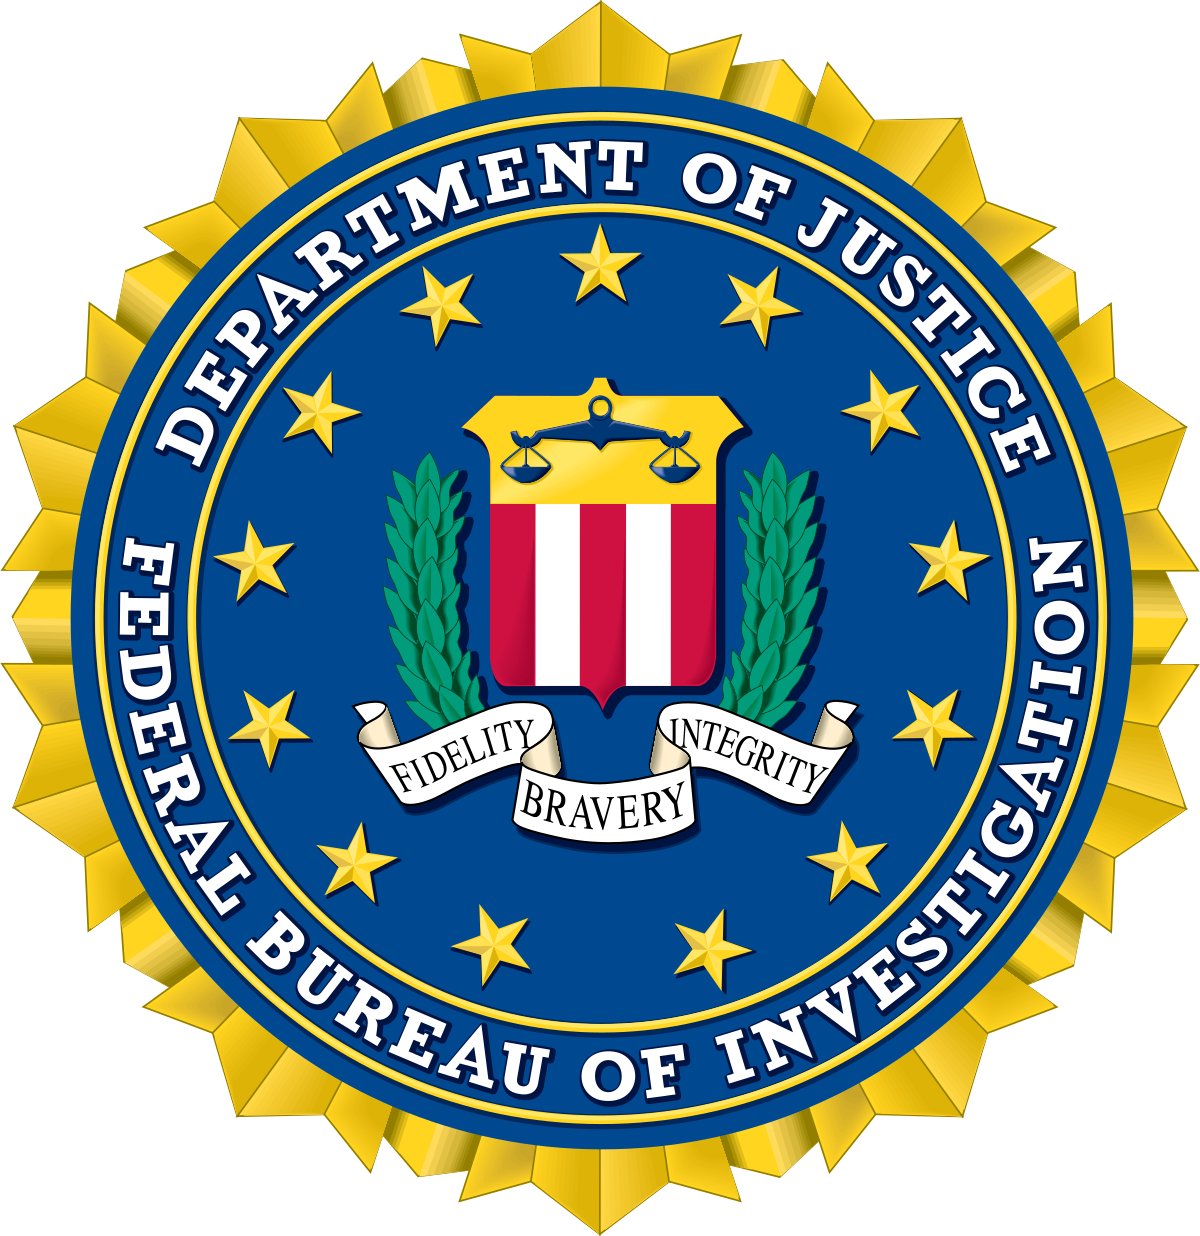 Federal Bureau of Investigation - Wikipedia